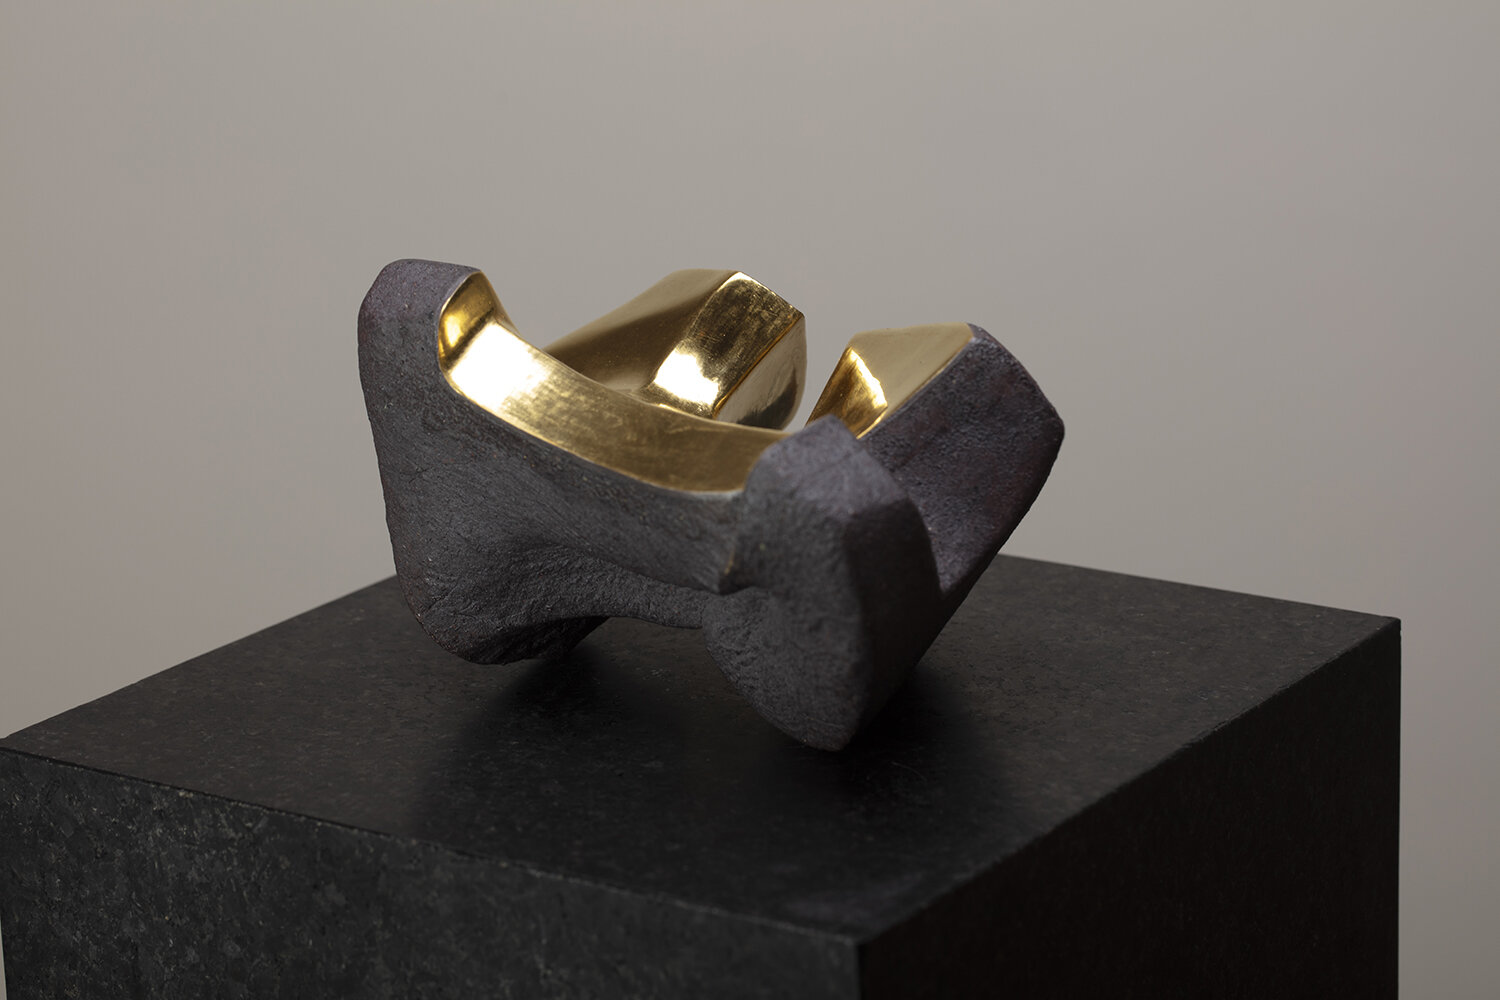 jorge-yazpik-untitled-3-sculptures-piece2-2-solid-clay-goldleaf-2020-marion-friedmann-gallery.jpg